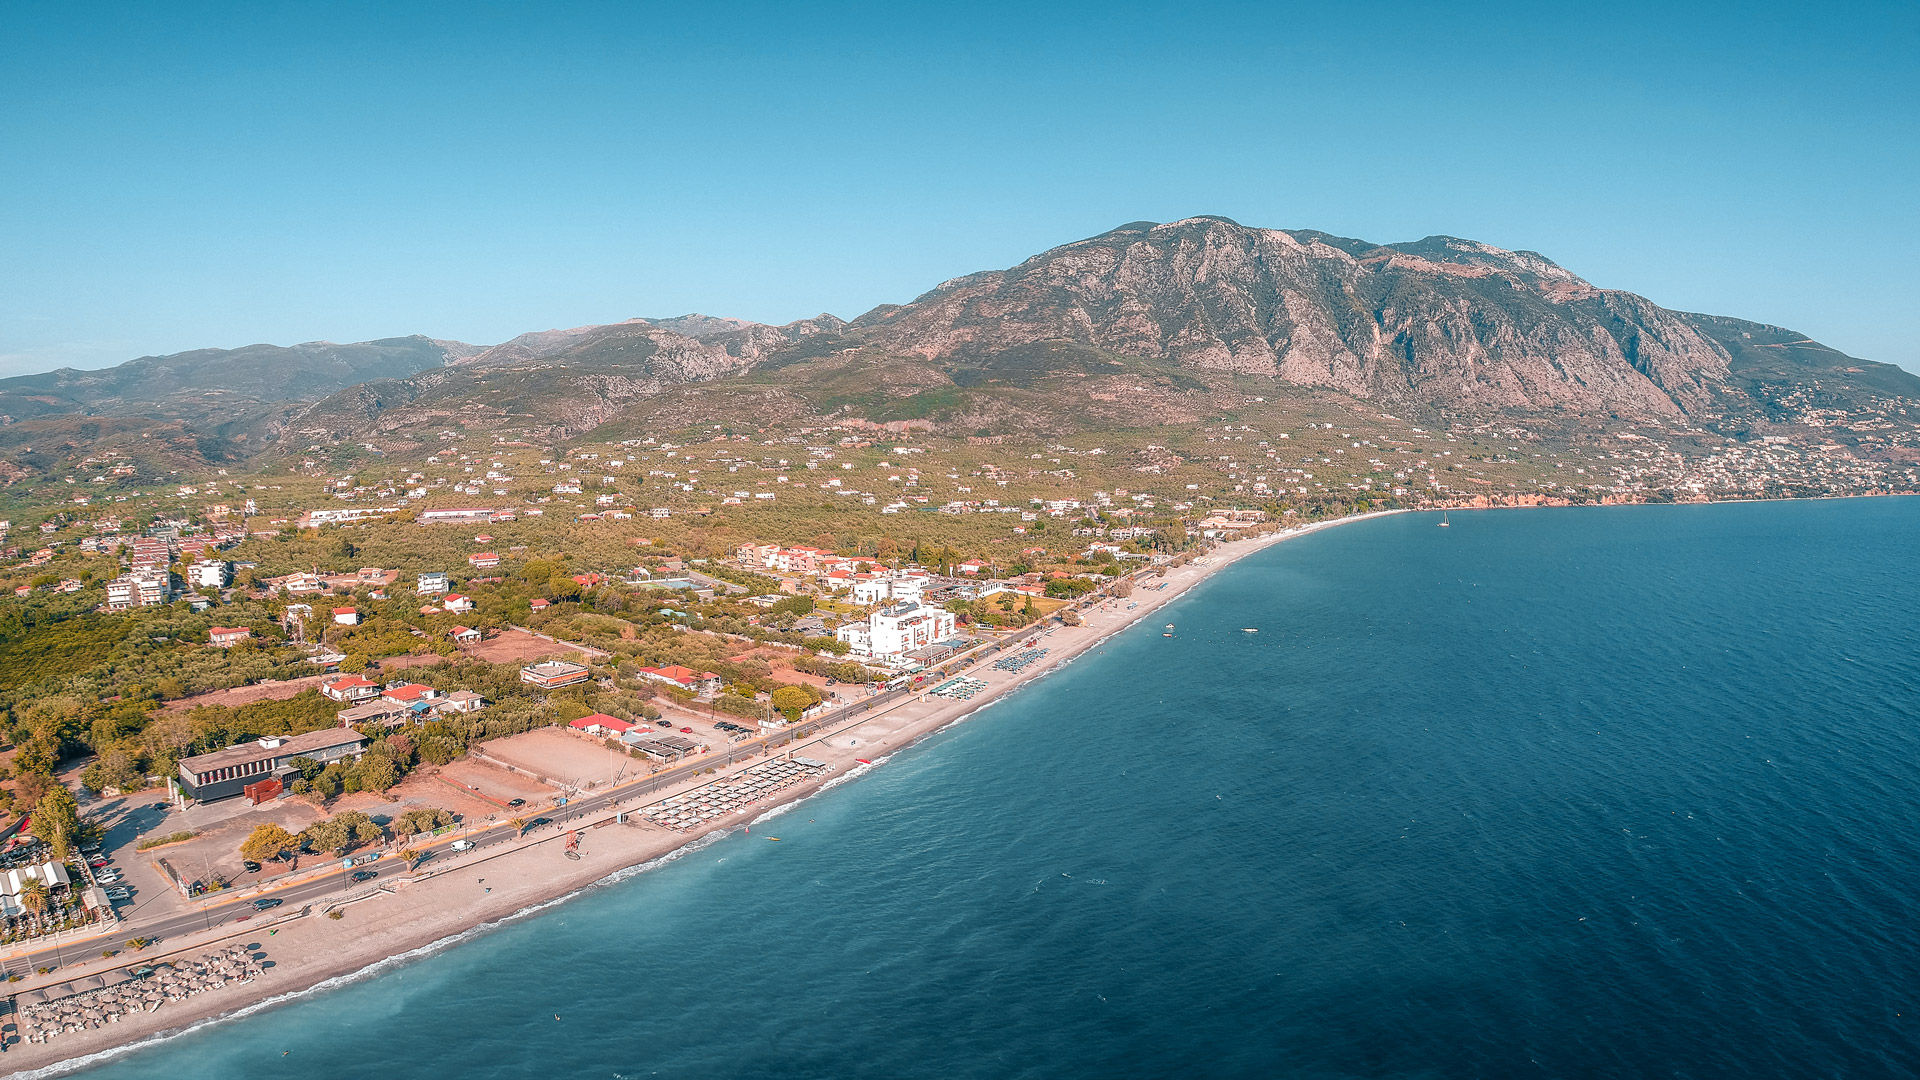 Panoramic view over the beautiful seaside city of Kalamata, Greece